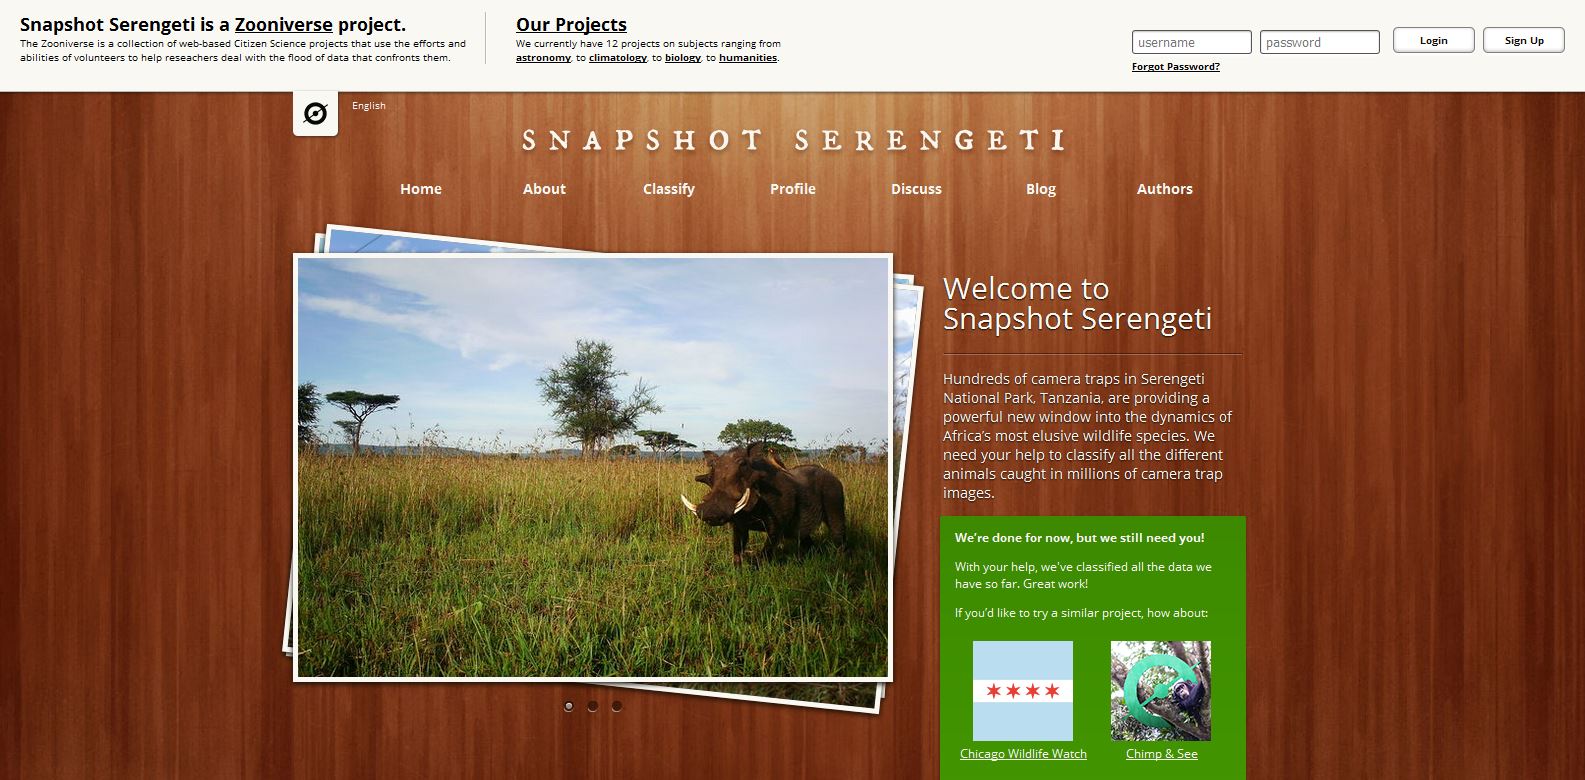 Snapshot Serengeti invites users to classify animals photographed in Serengeti National Park.